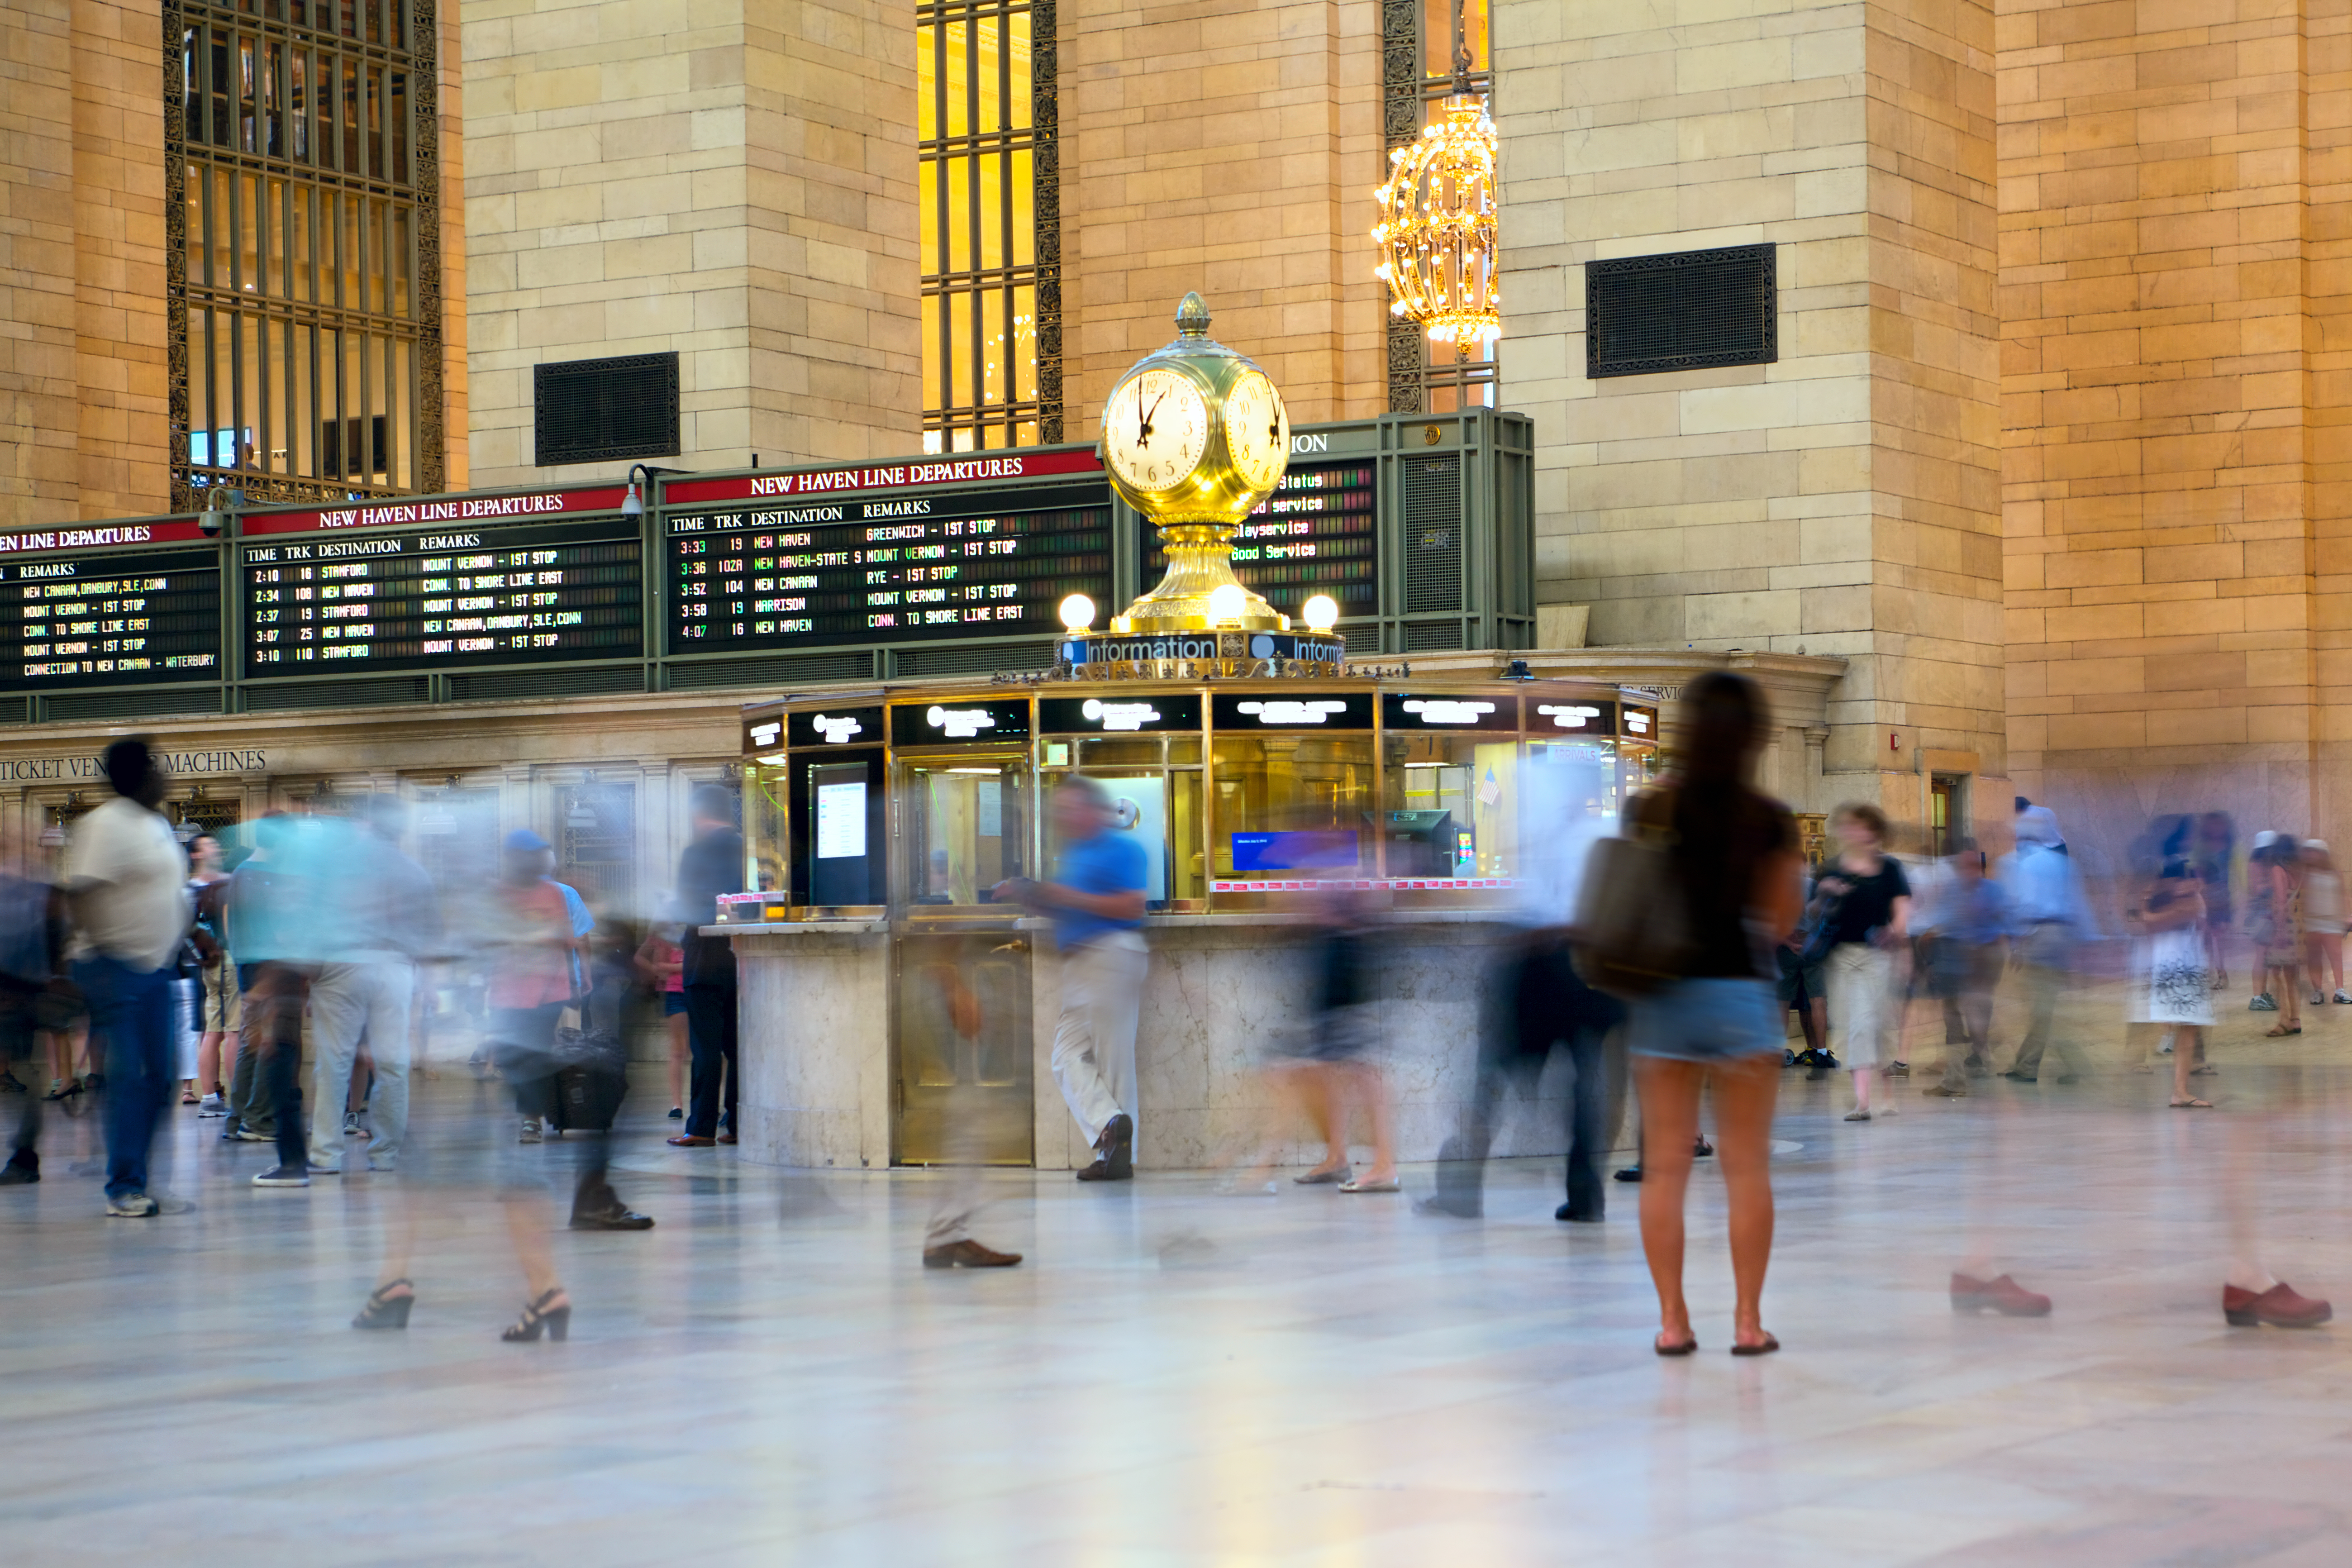 Grand Central Station, New York